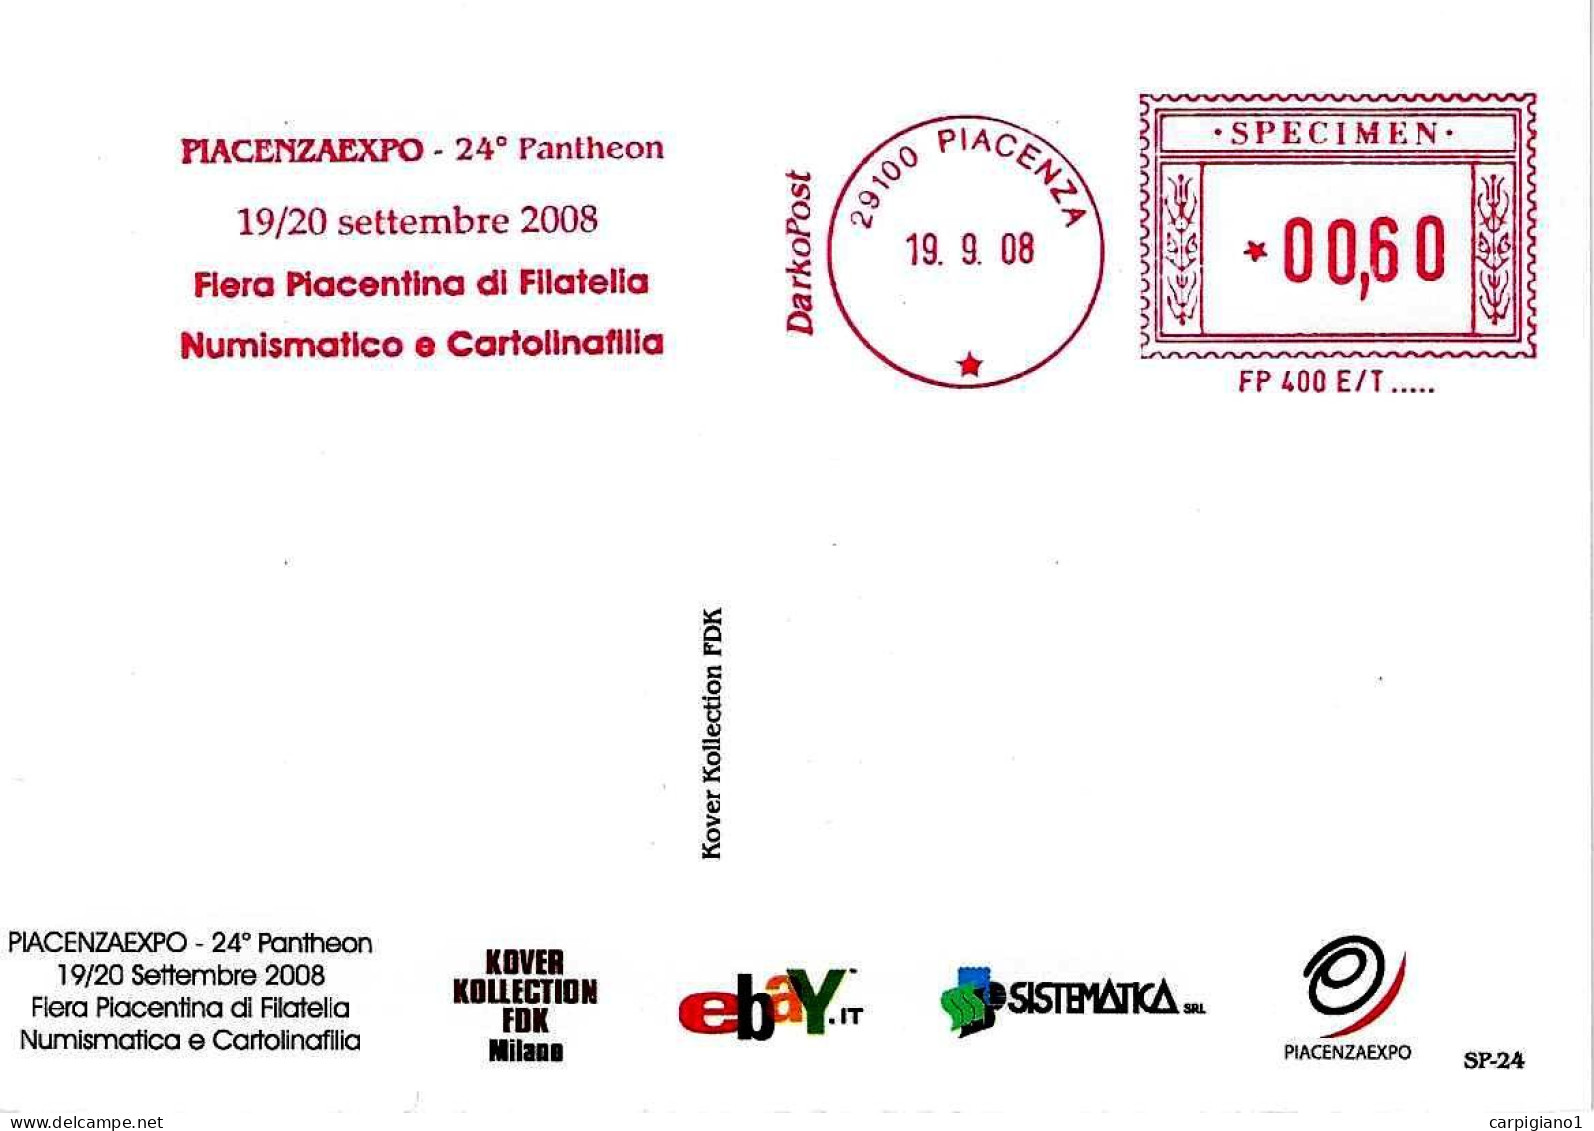 ITALIA - 2008 PIACENZA 24° Pantheon Piacenzaexpo Fiera Filatelia - Ema Affrancatura Mecc. Rossa Red Meter SPECIMEN - 653 - 2001-10: Marcophilie